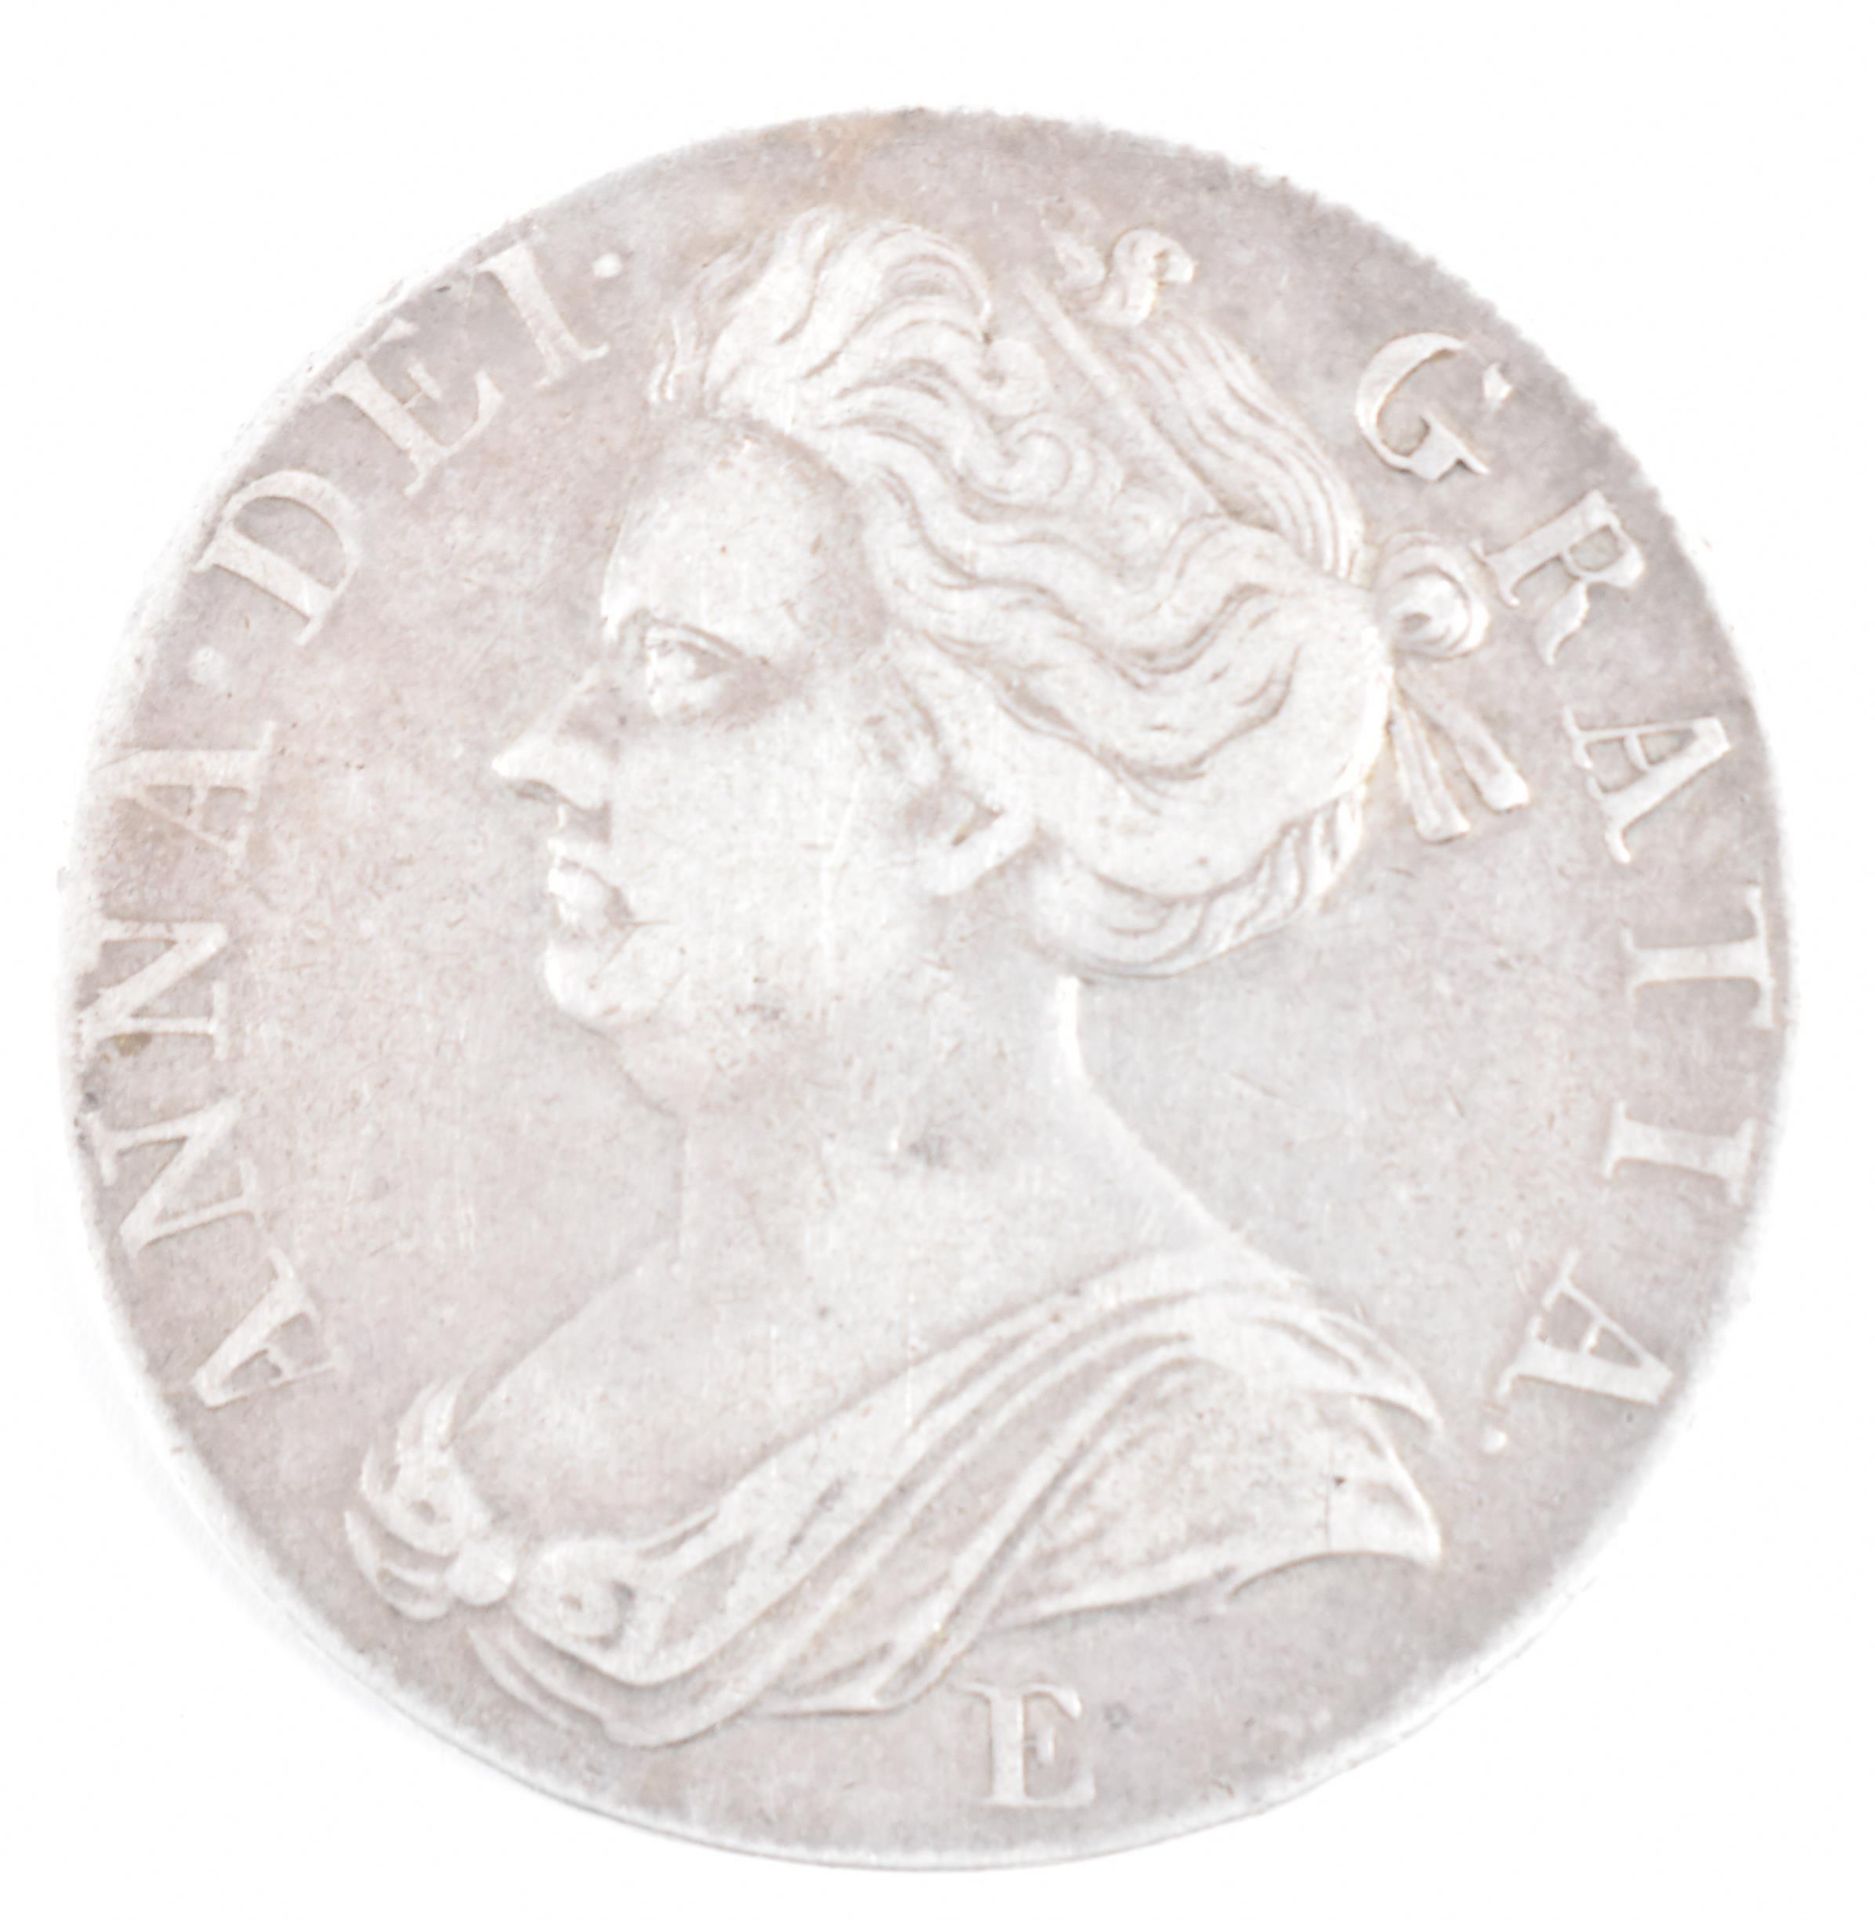 18TH CENTURY 1707 QUEEN ANNE SILVER CROWN COIN